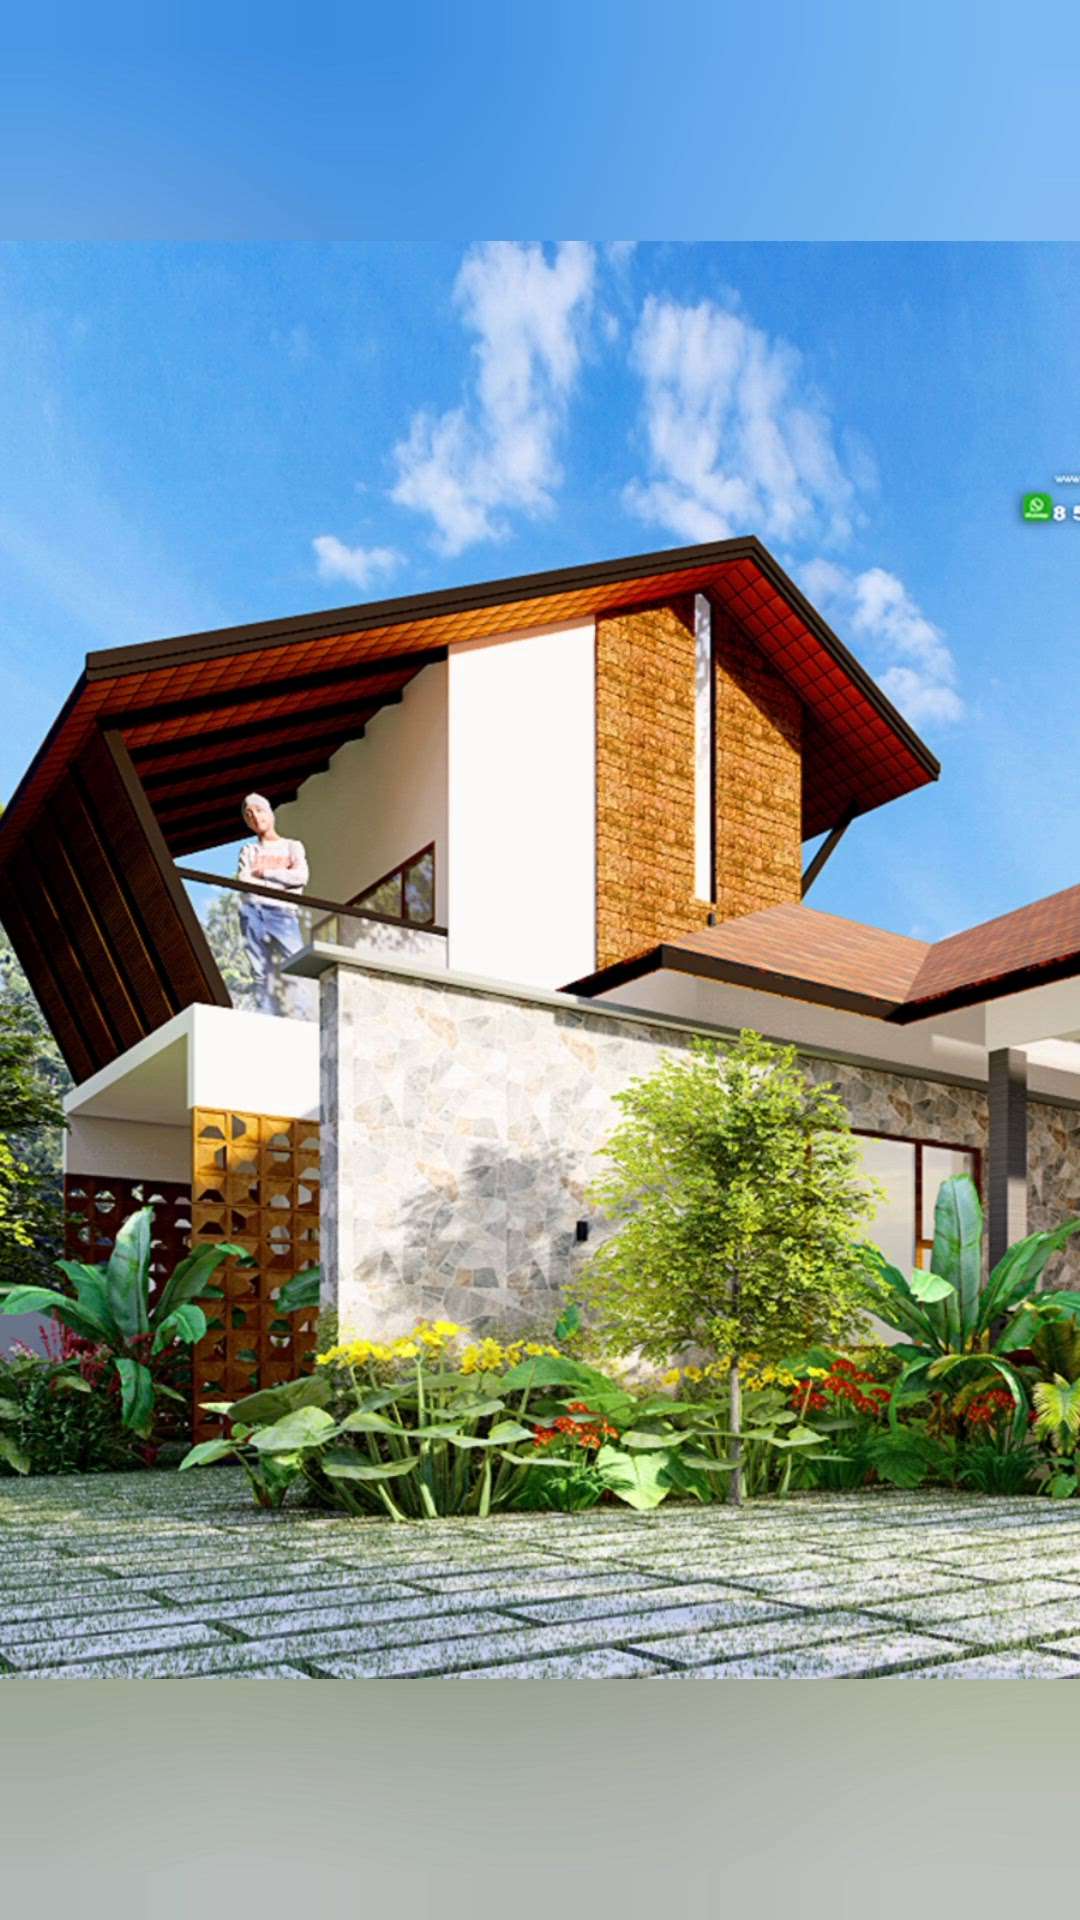 Running Project @Cherukulamba
4BHK    2700sqft 

Concept By AB FAISAL
+91 9995927888 , +91 8589998181

#HomeDecor #ElevationHome #homesweethome #TraditionalHouse #SingleFloorHouse #4bhk #exteriordesigns #constructionsite